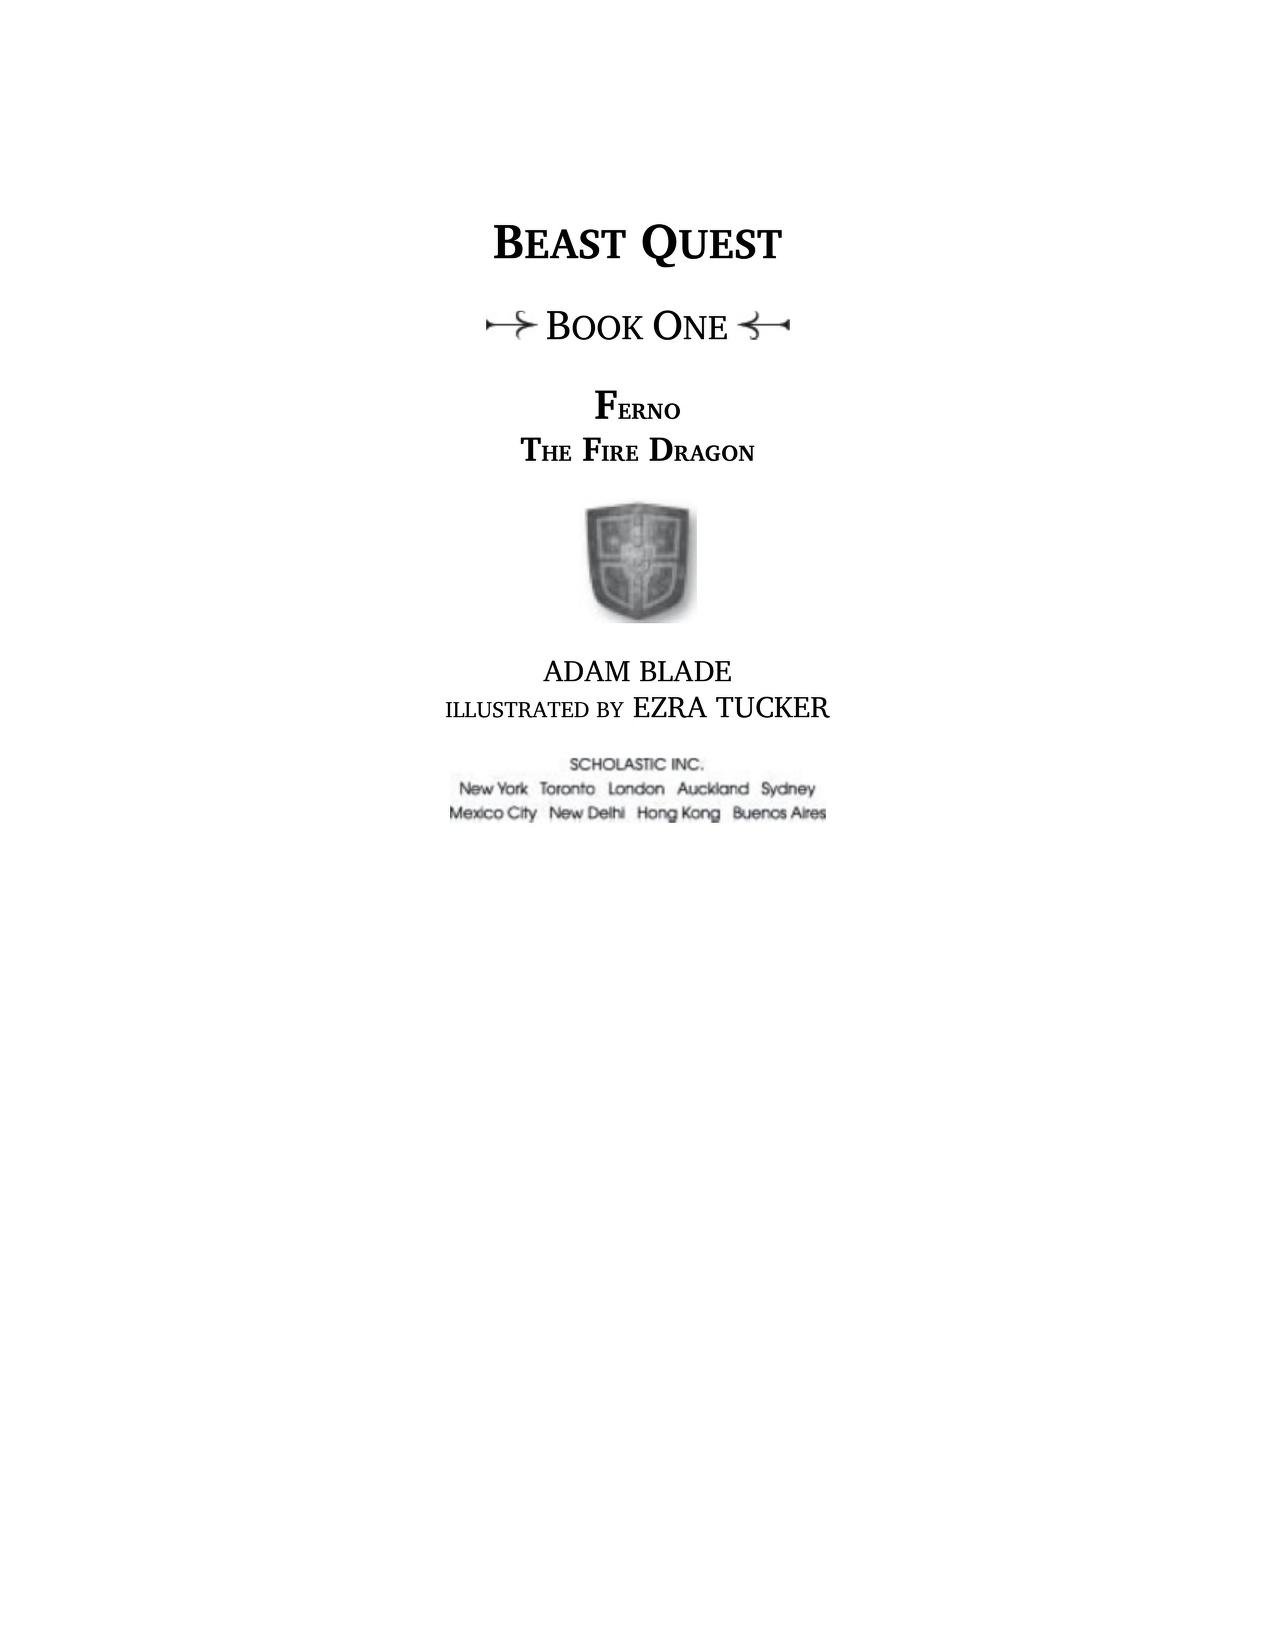 Beast quest books free download pdf 2nd grade math worksheets pdf free download